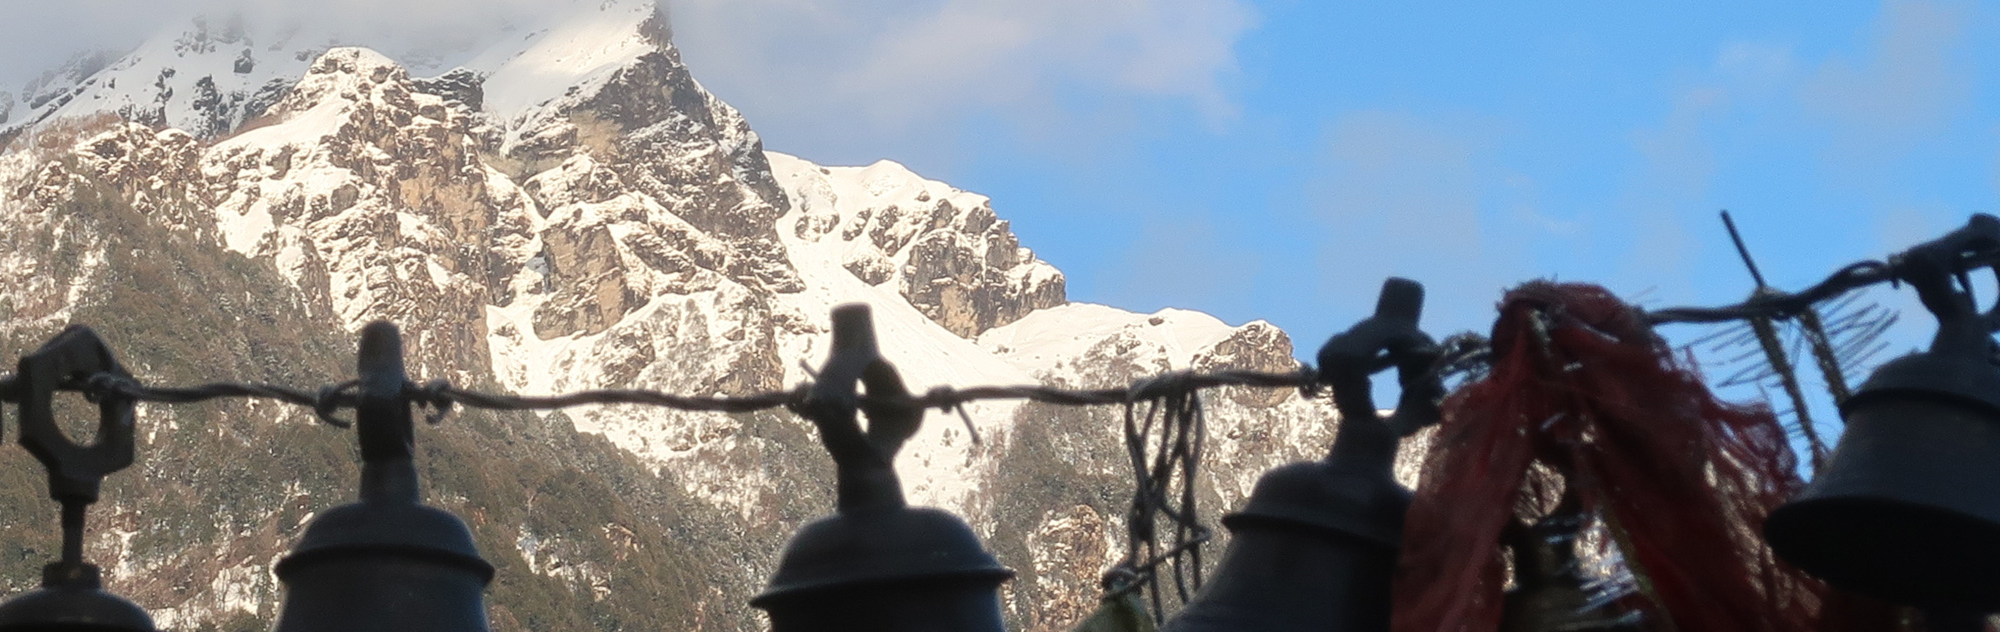 Glocken im Himalaya